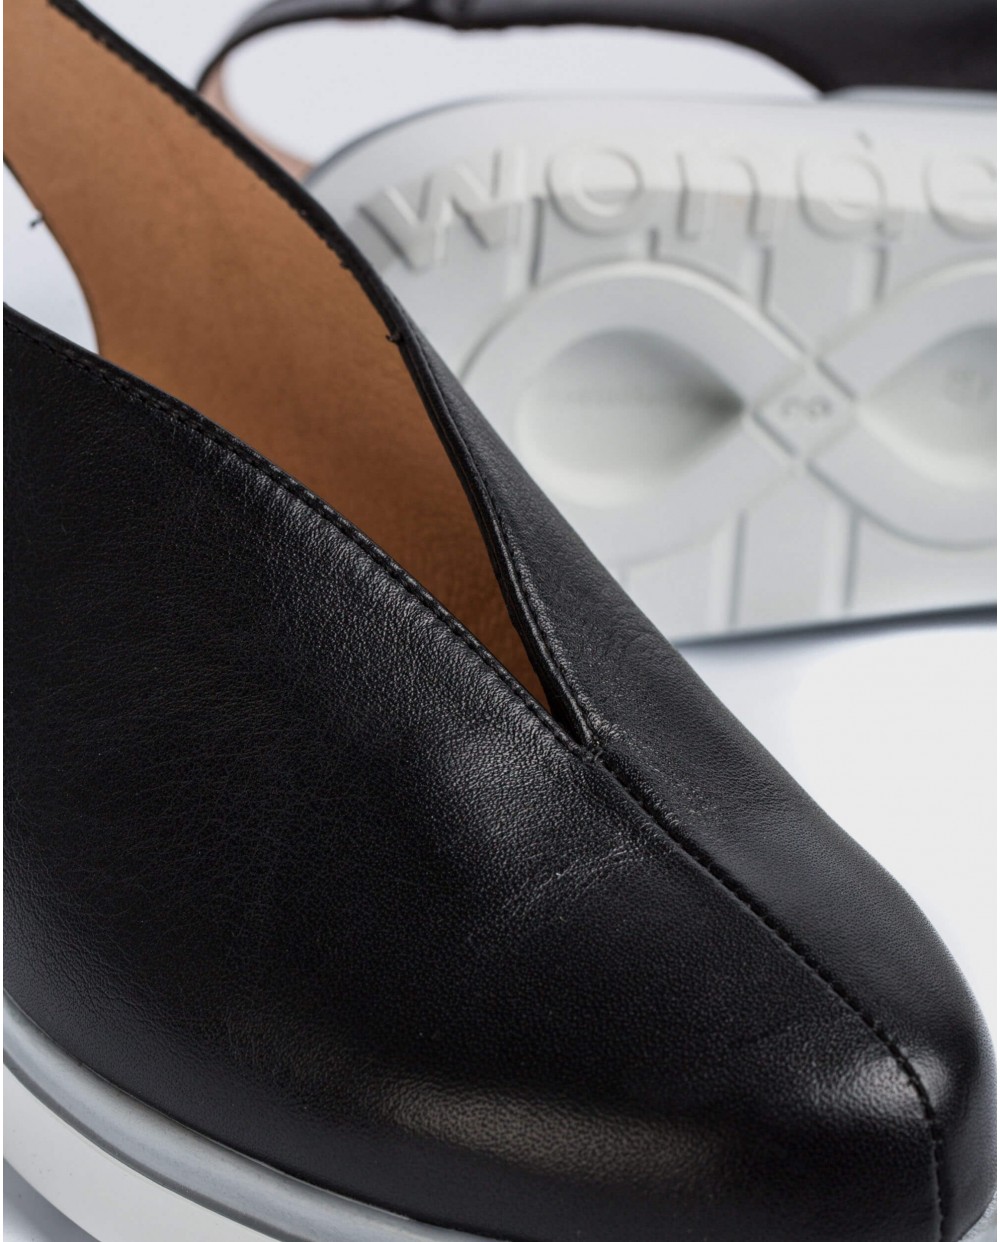 Wonders-Outlet-Leather V cut shoe